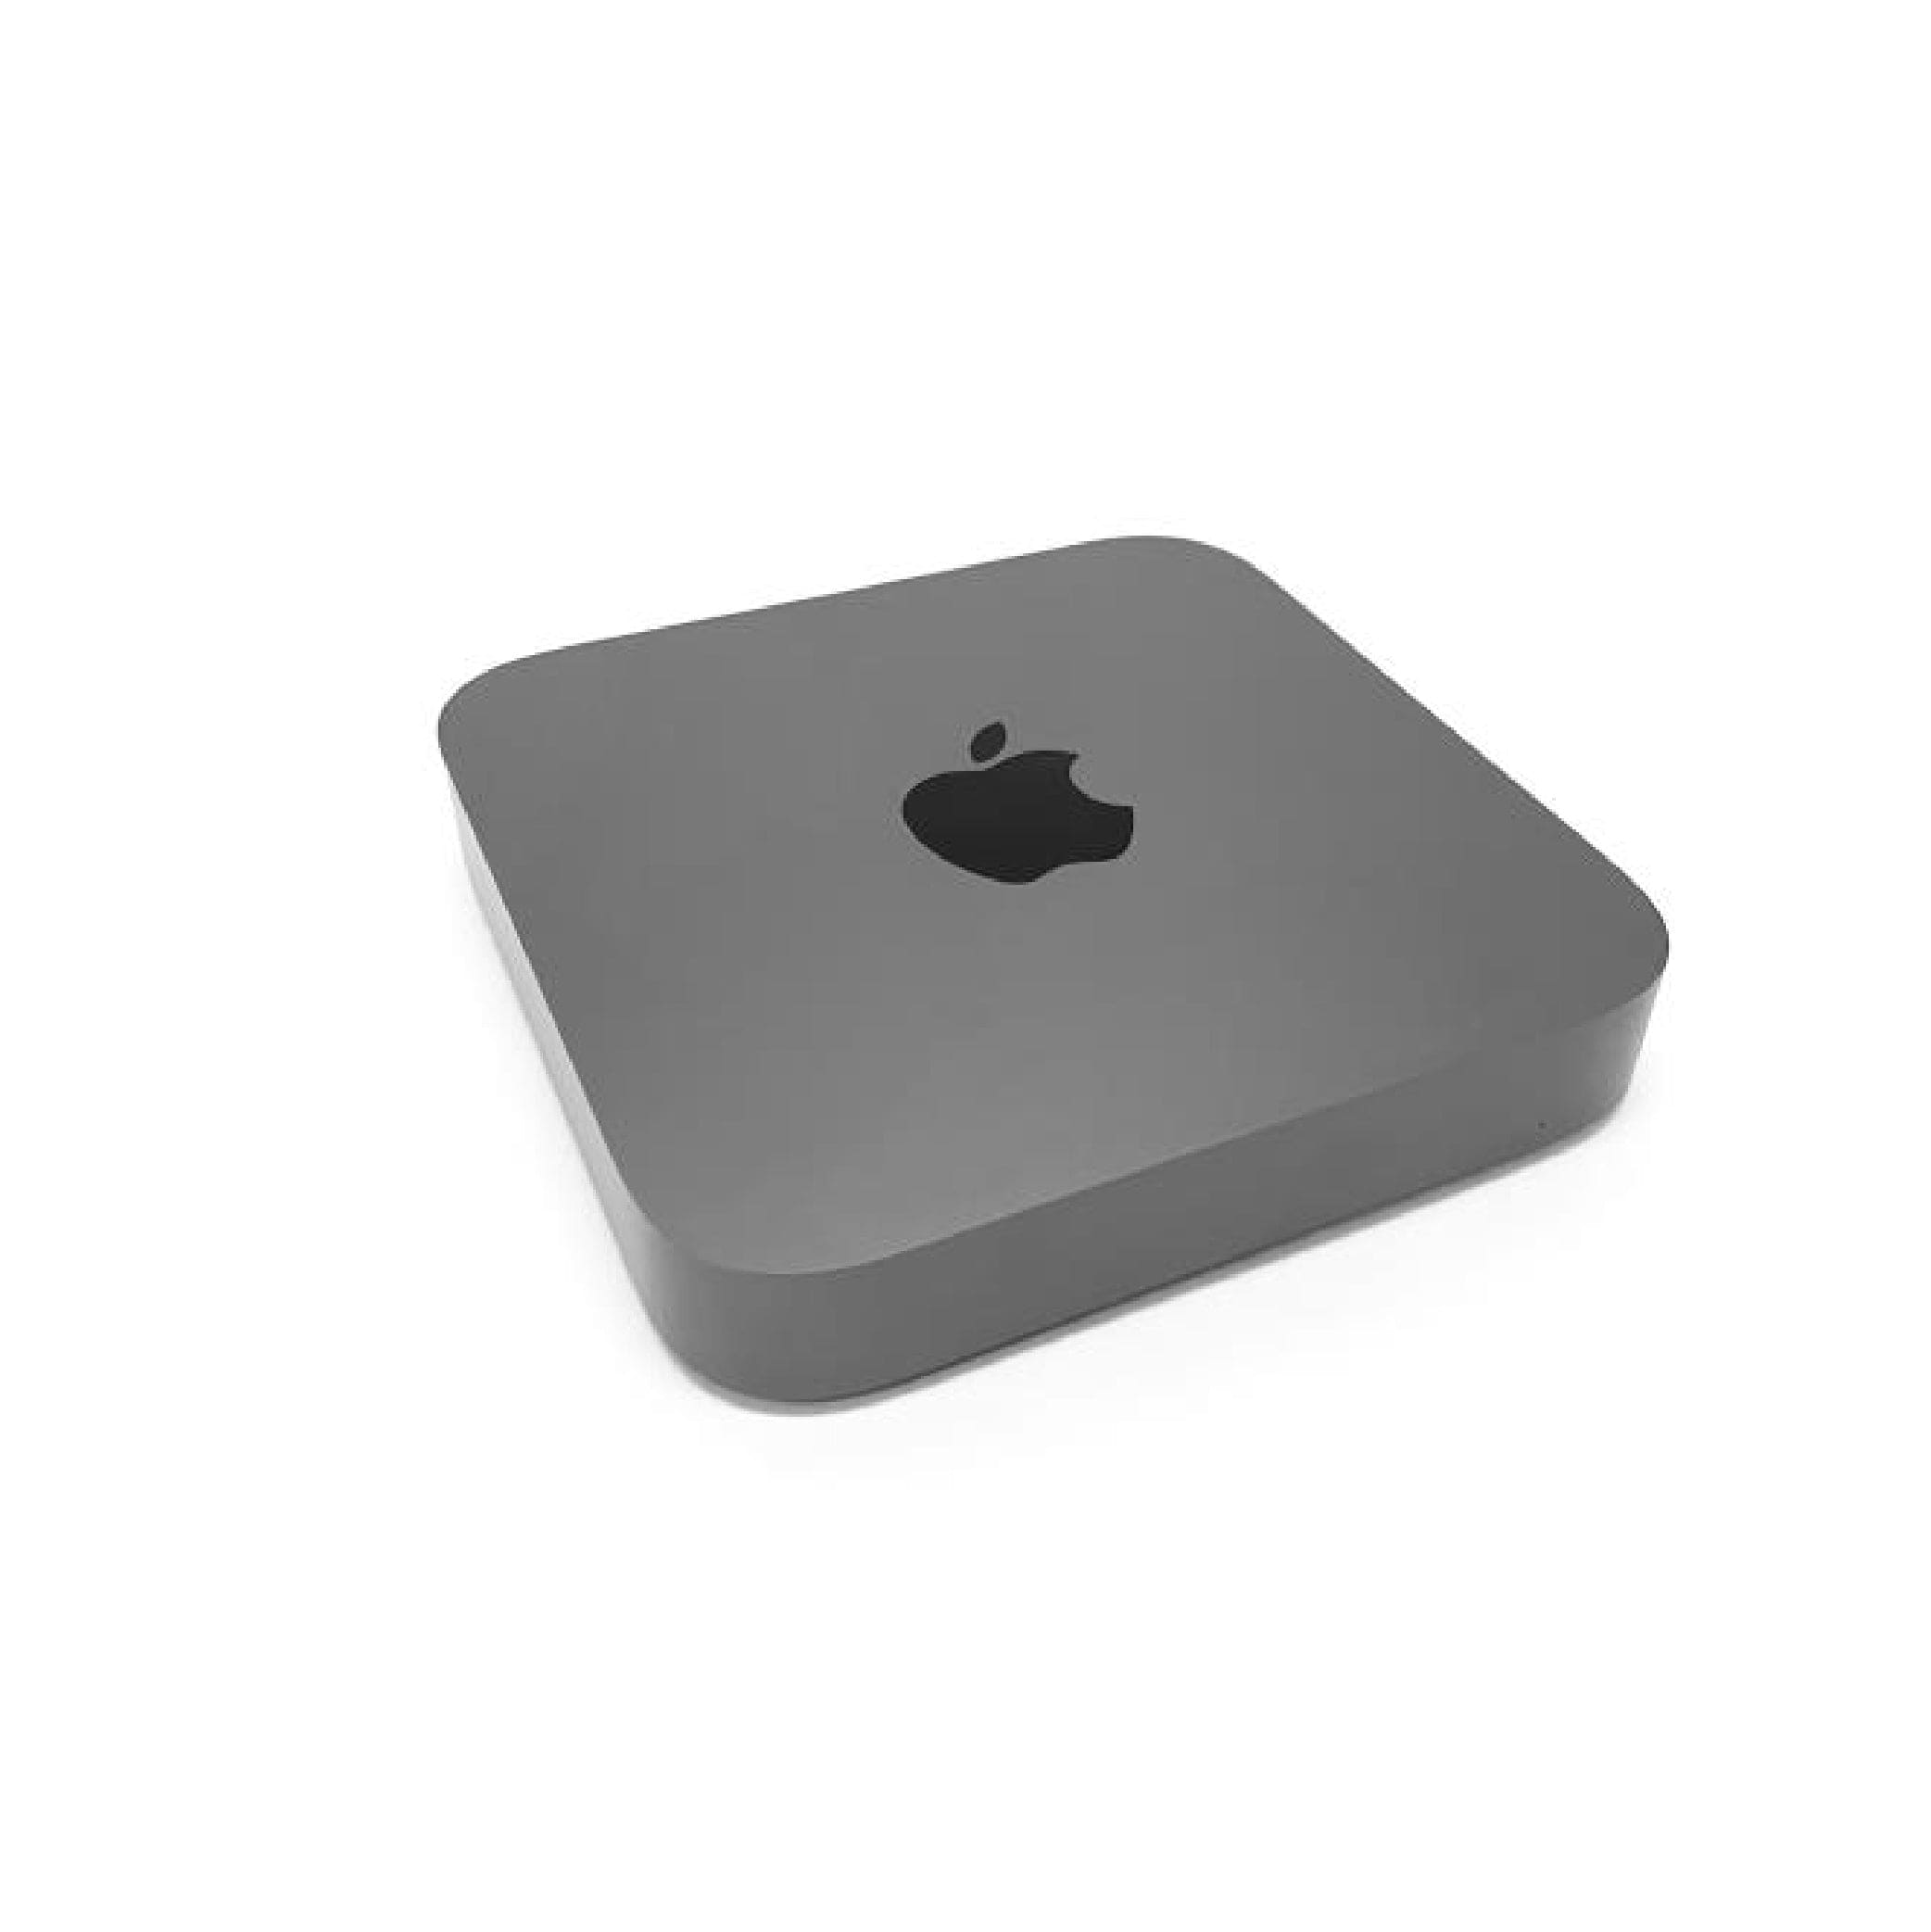 Apple - Mac mini Desktop MXNF2LL/A - Intel Core i3 - 8GB Memory - 256GB Solid State Drive - Space Gray